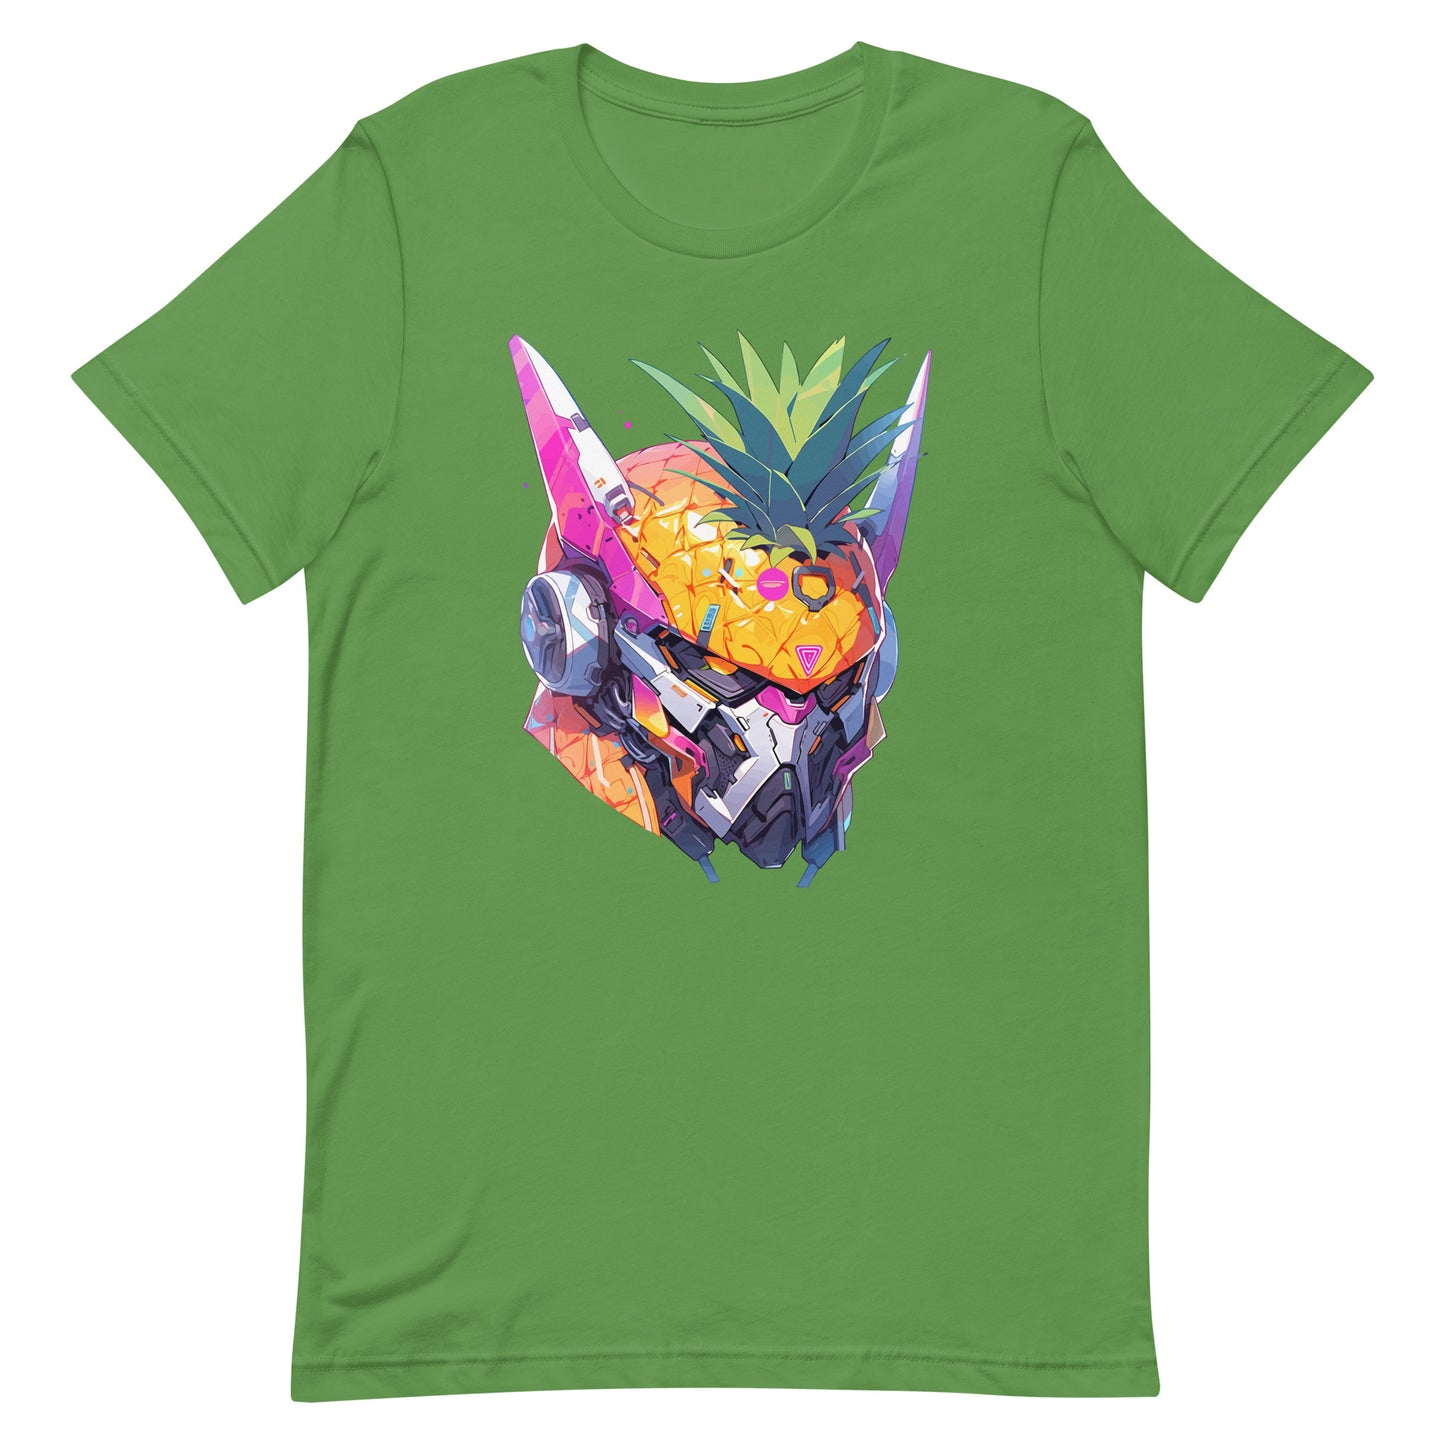 Cyber pineapple, Fantastic fruit robot head, Pop Art fantasy mutant - Unisex t-shirt